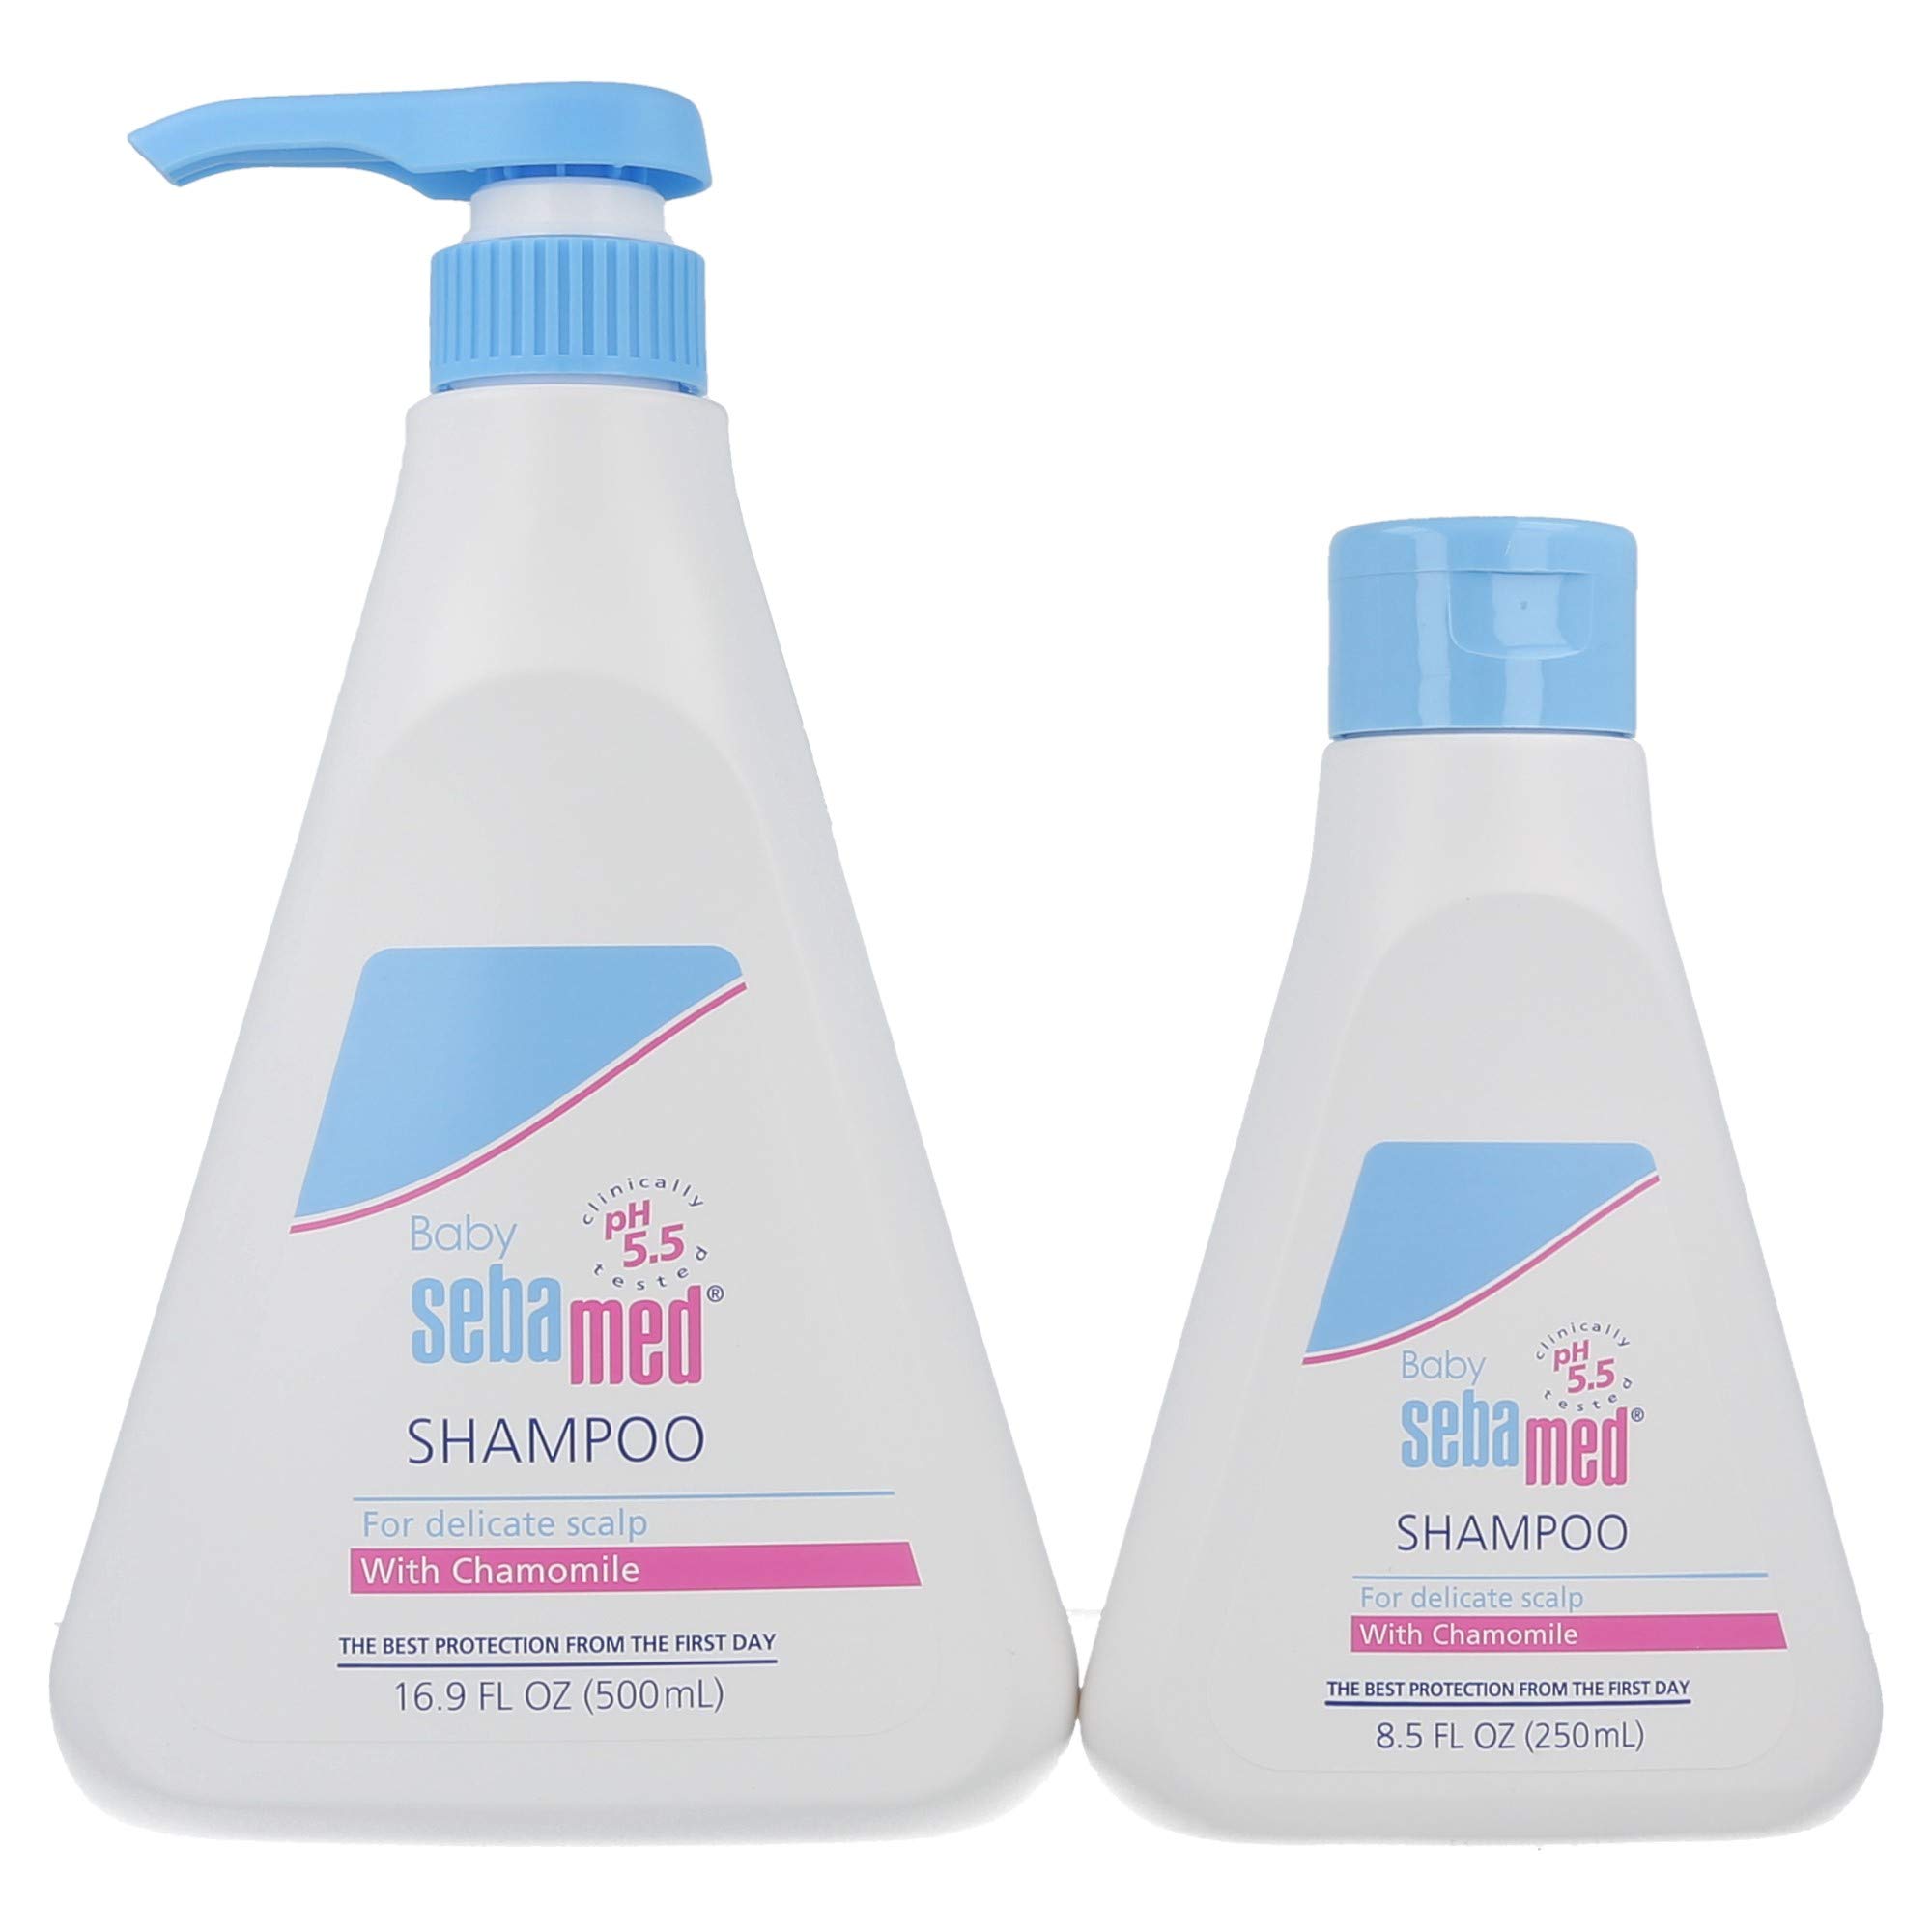 Sebamed Classic Anti-Hairloss Shampoo - Anti Hair Loss Shampoo | Makeup.uk